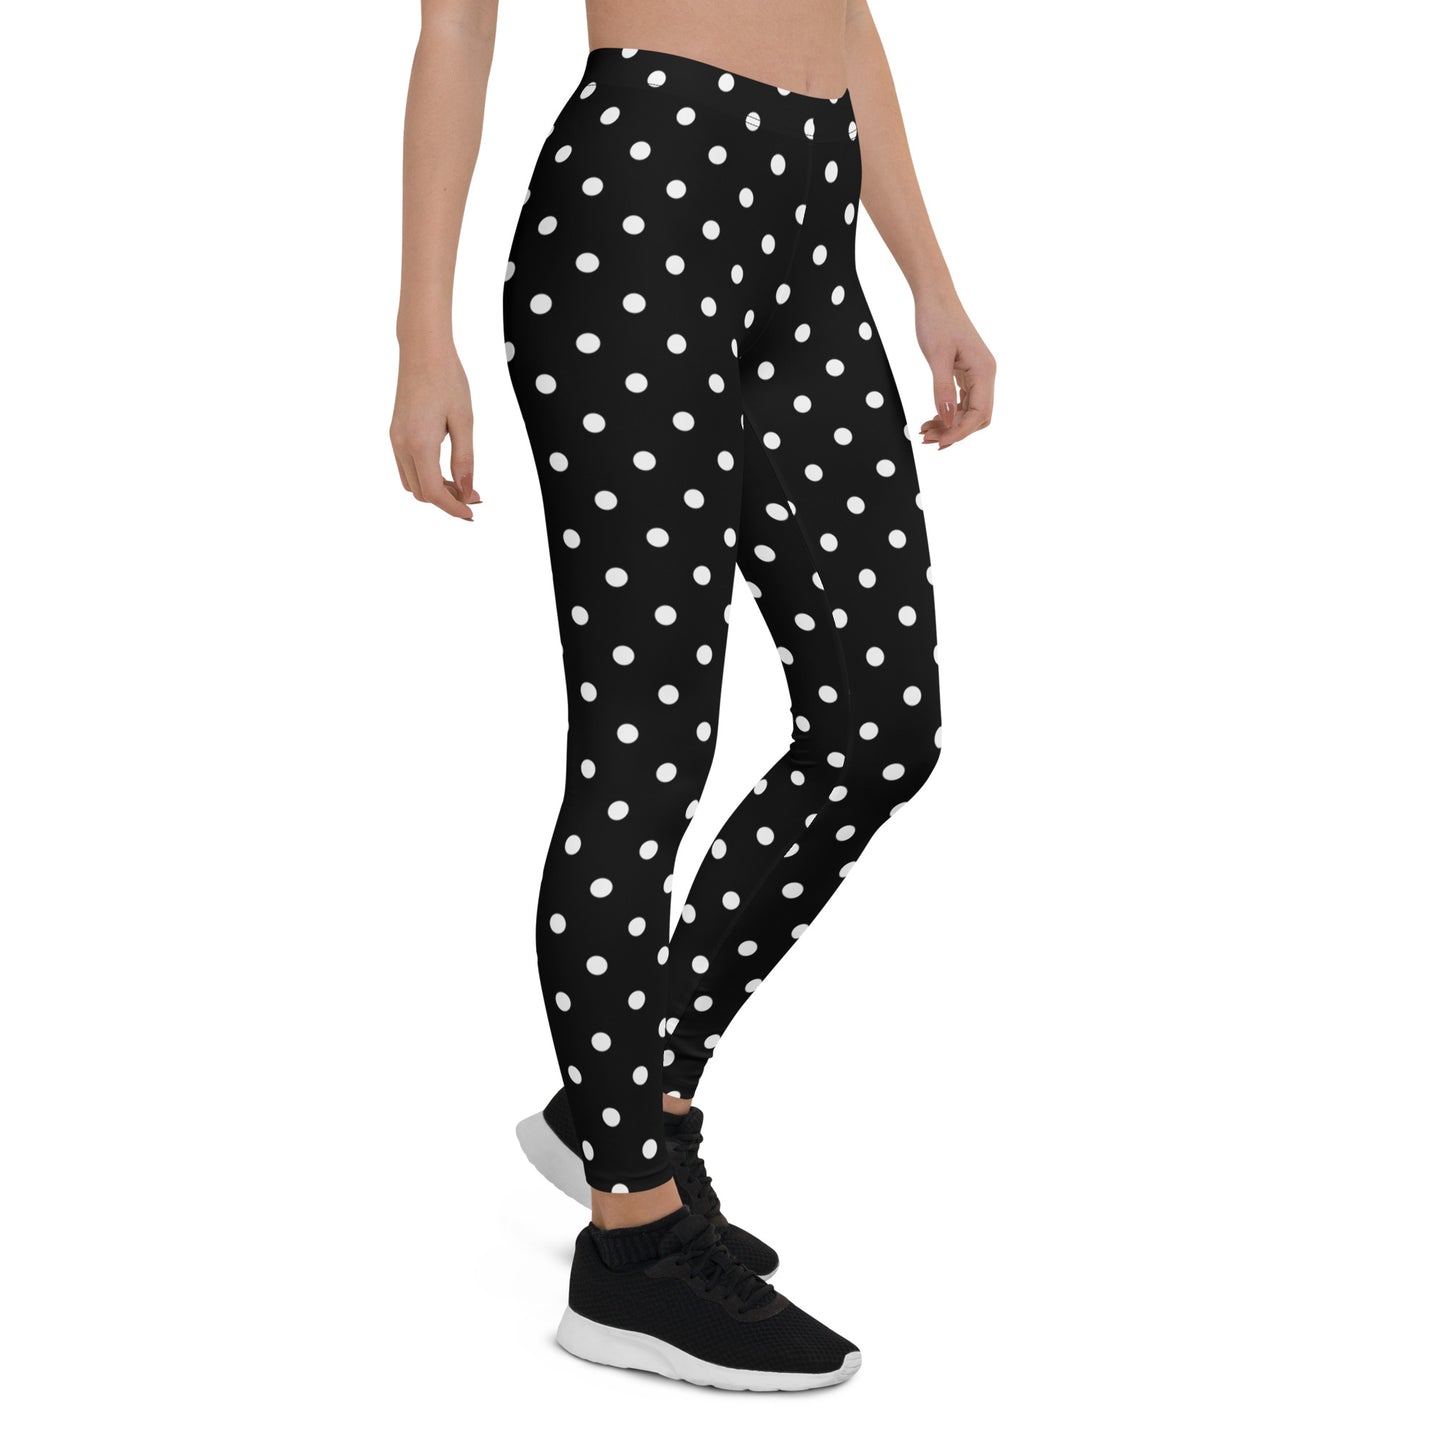 Black White Polka Dot Leggings, Christmas Leggings for Women Yoga Pants Printed Print Cute Graphic Workout Running Gym Fun Designer